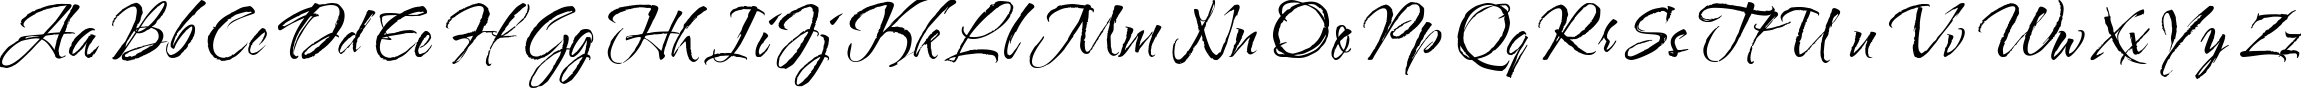 Пример написания английского алфавита шрифтом WaterBrushROB